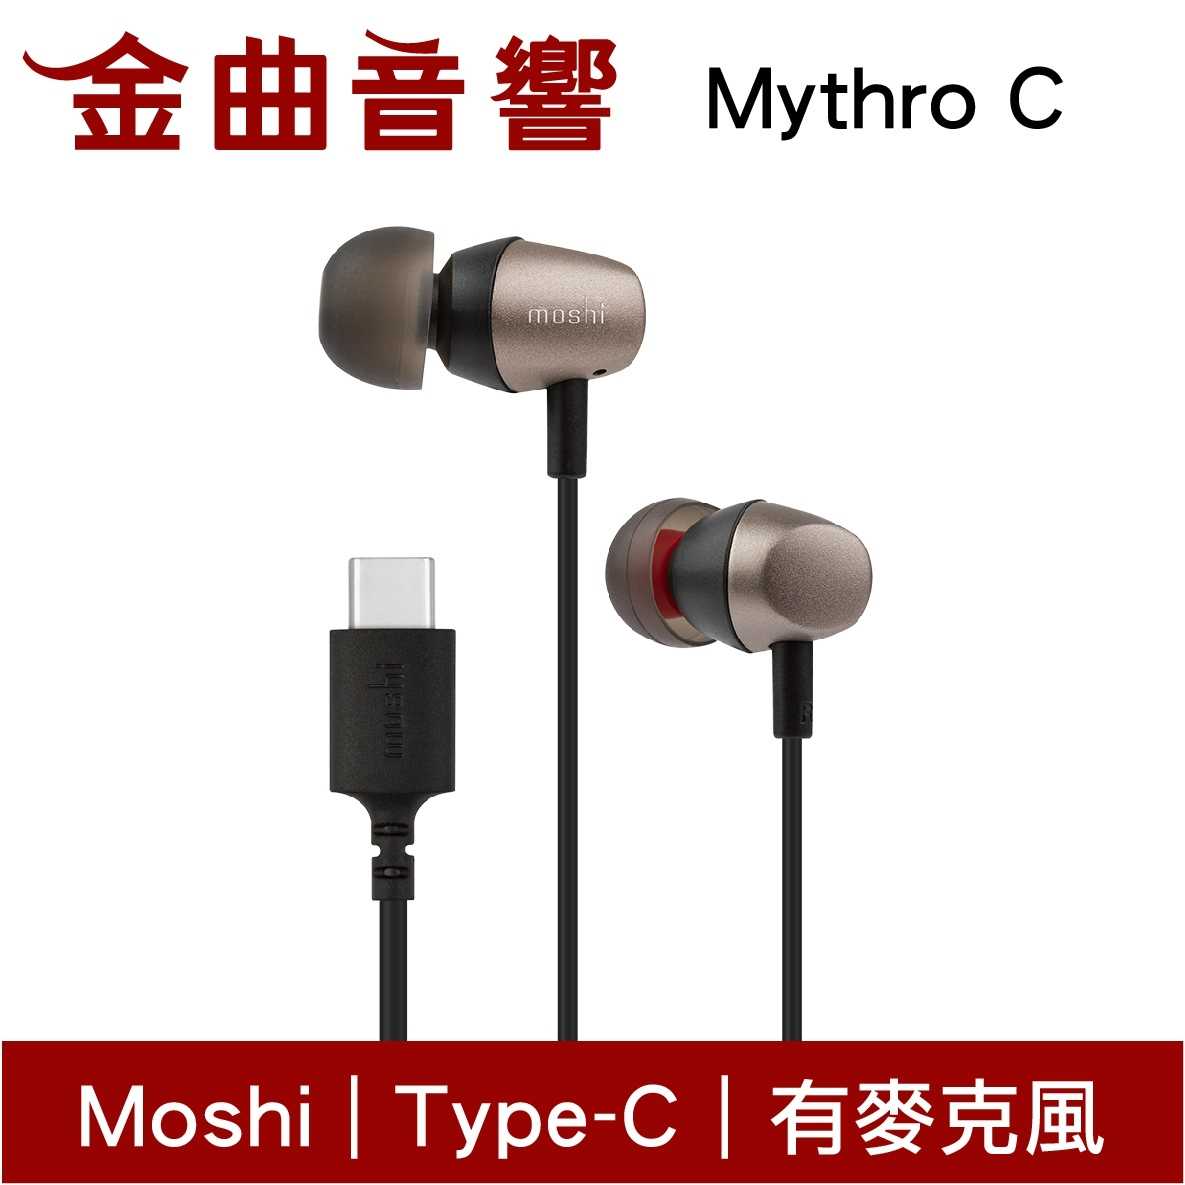 Moshi Mythro C USB Type-C 銀白色 耳機 麥克風耳機 | 金曲音響